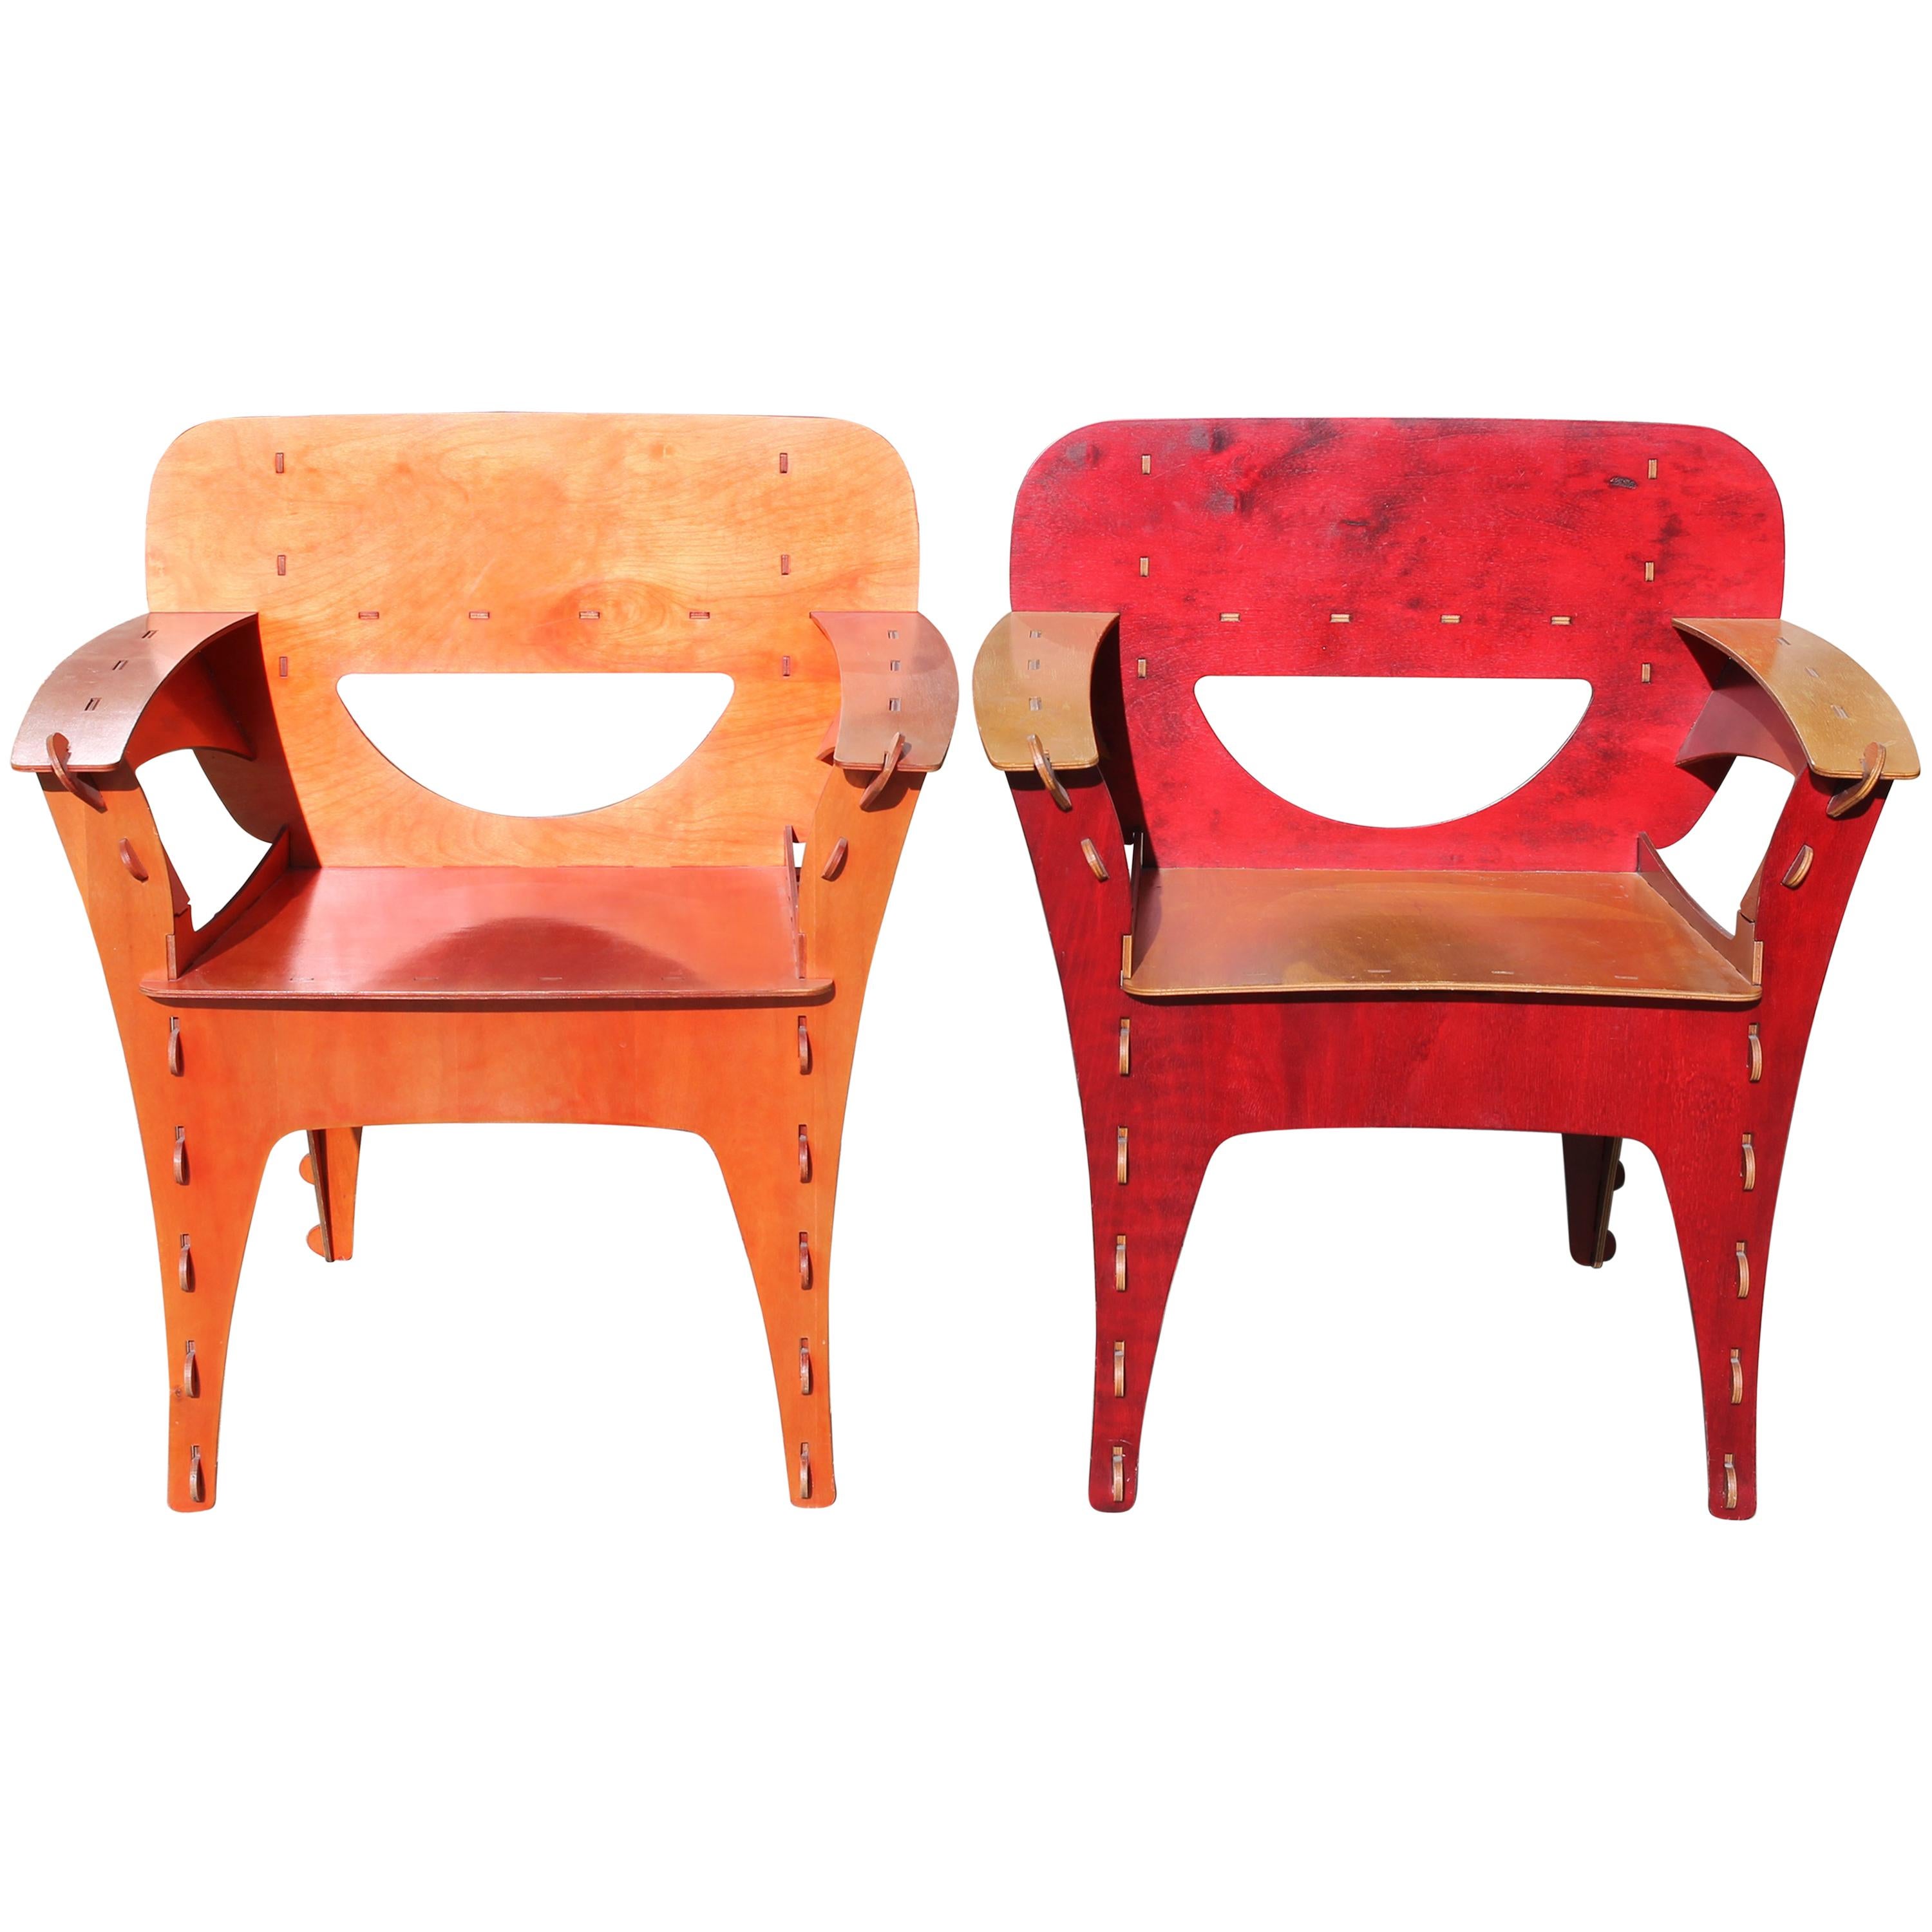 Pair of David Kawecki "Puzzle" Chairs